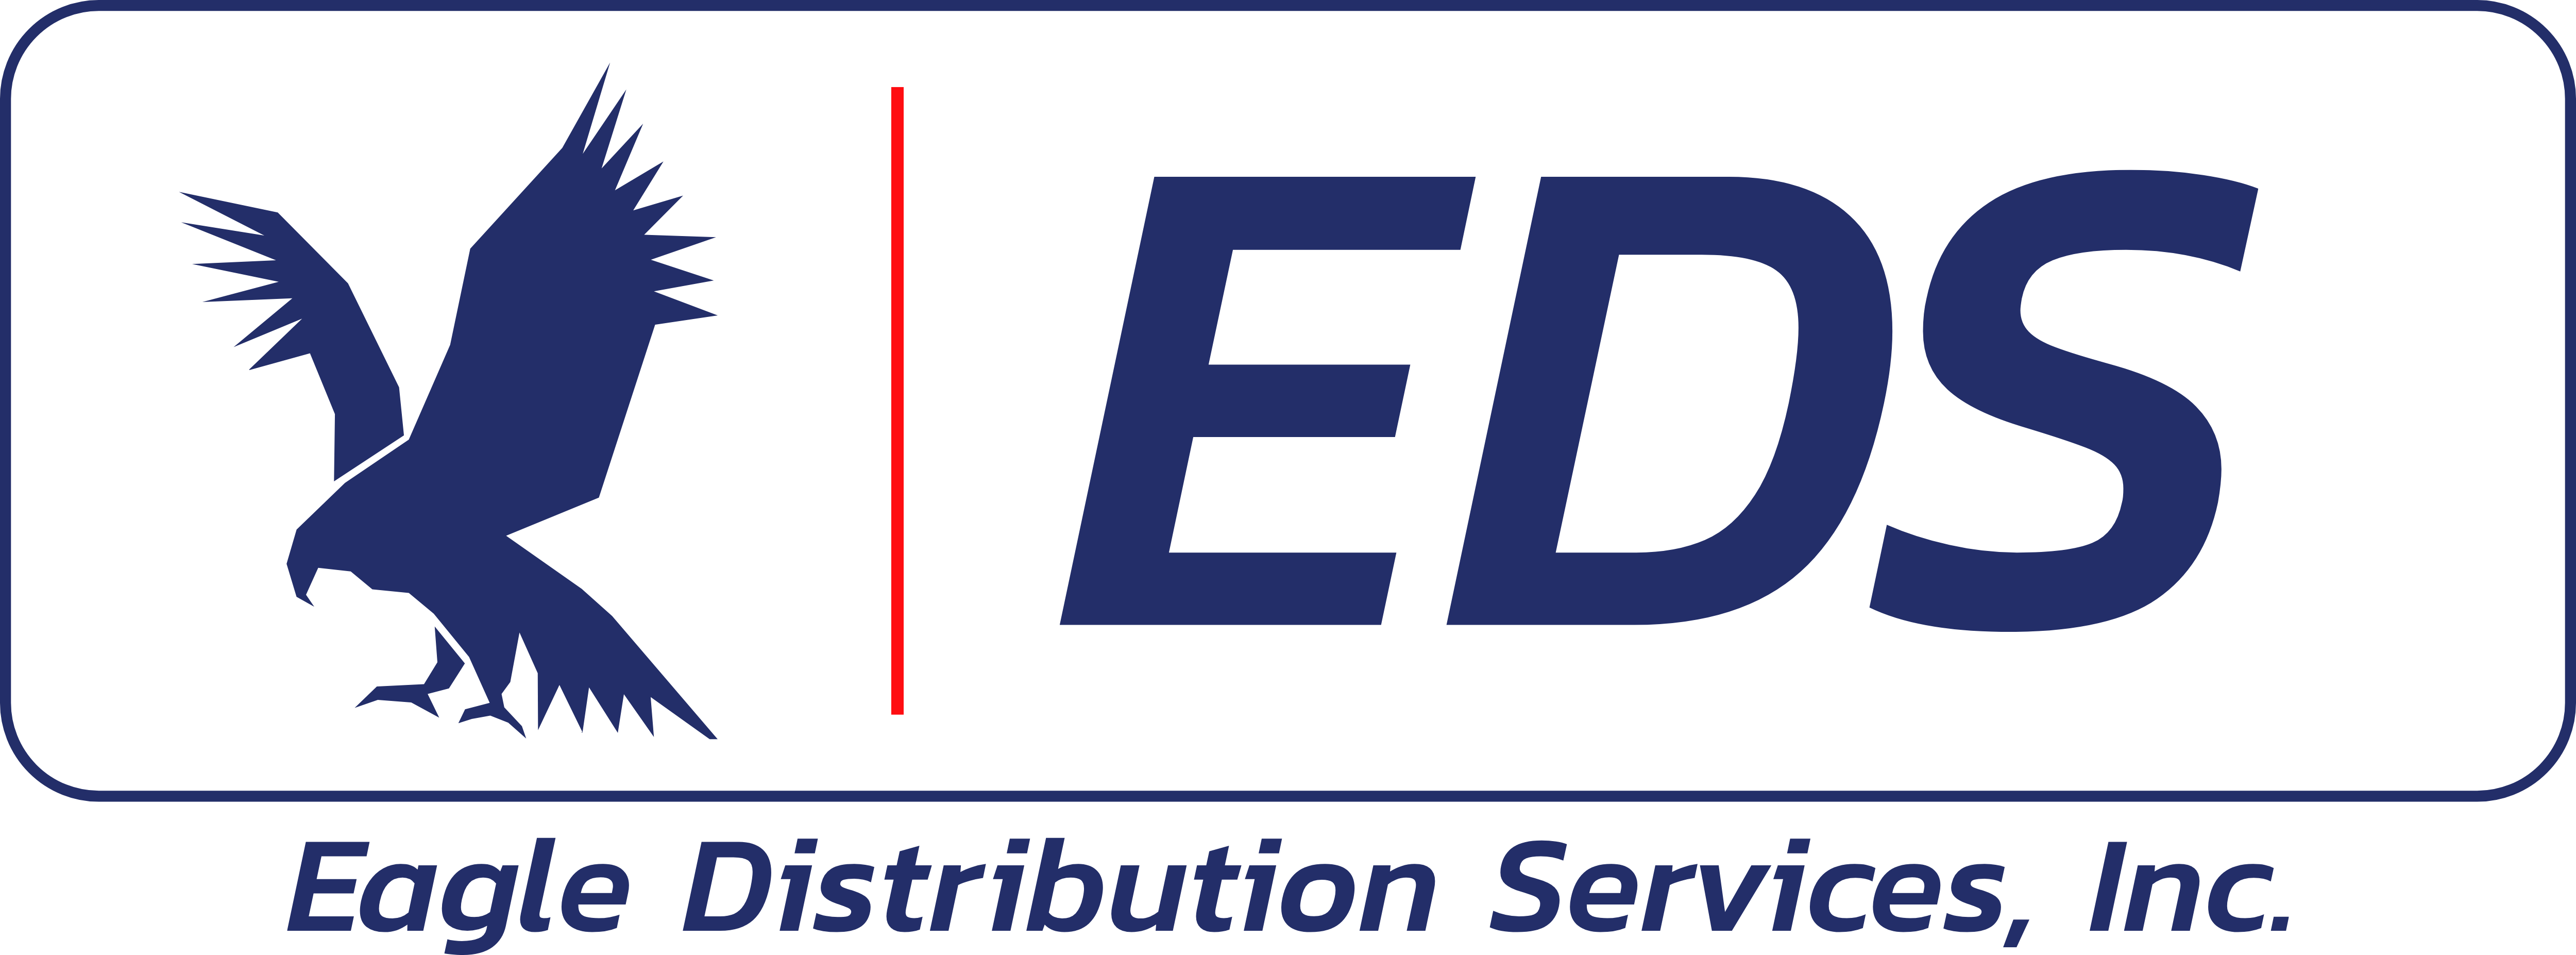 Eagle Distribution Services